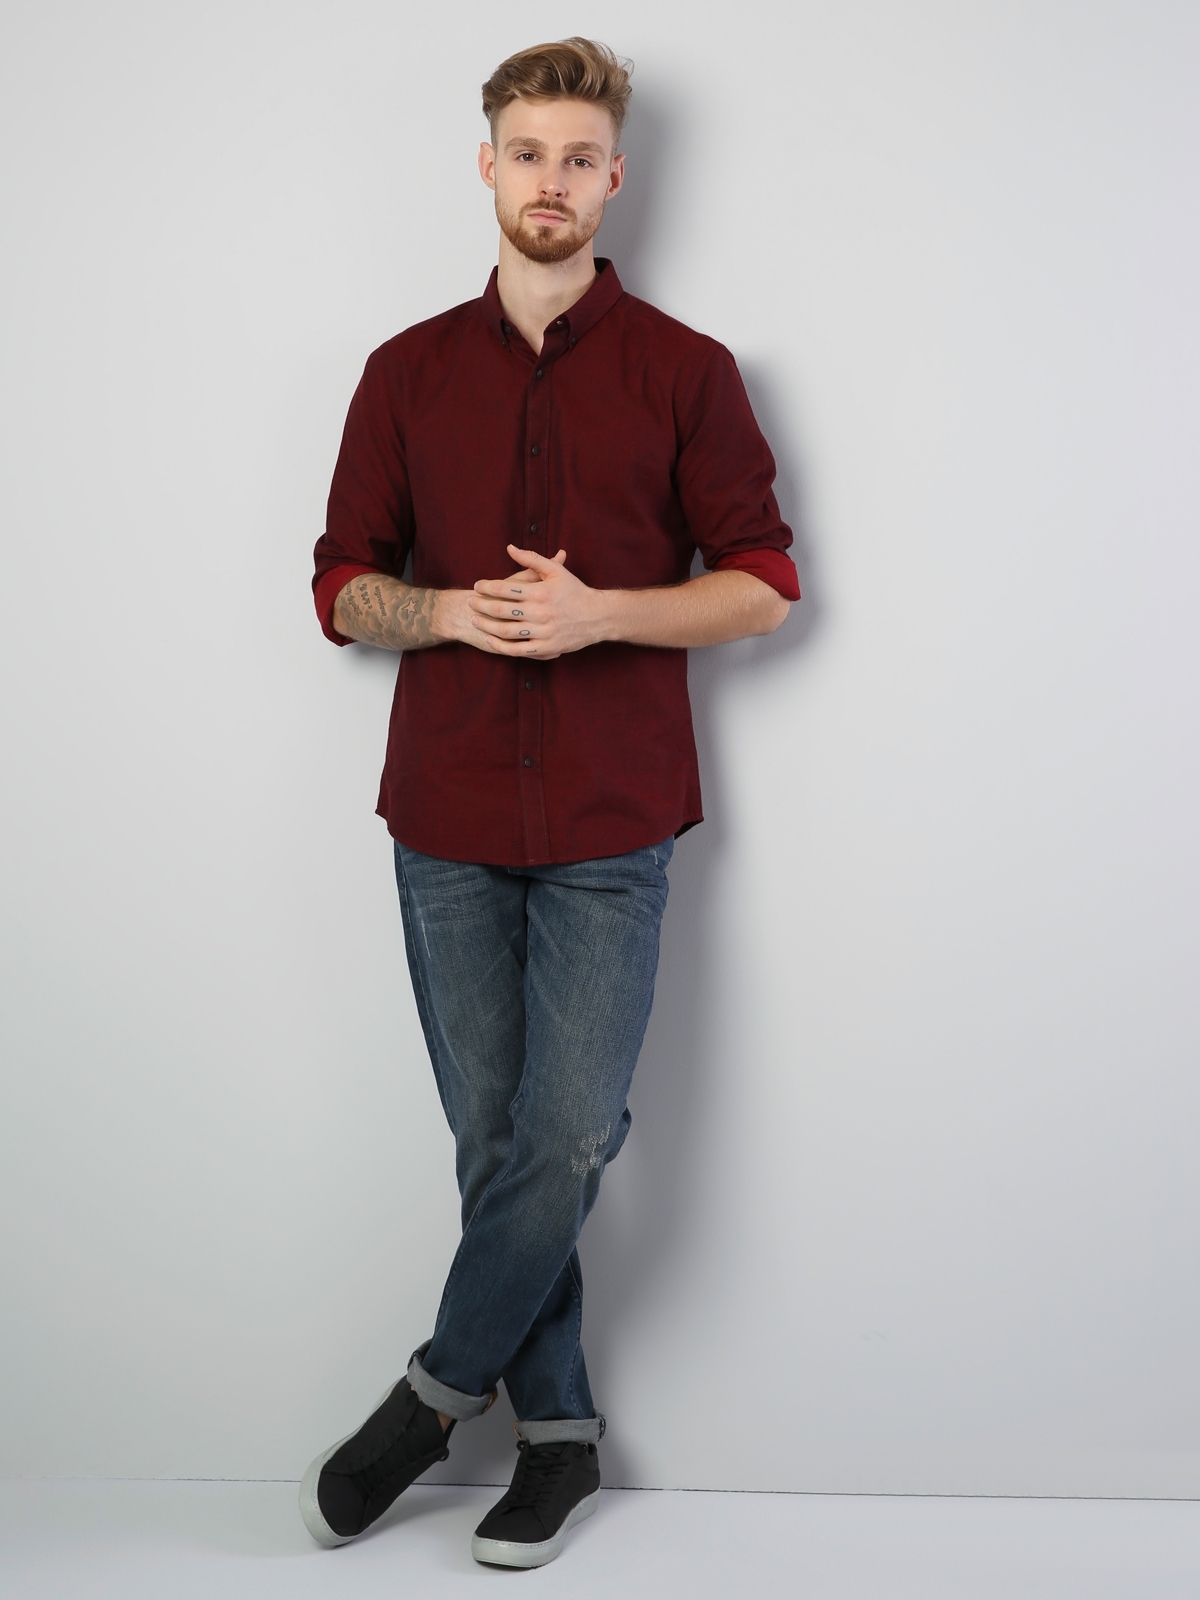  Modern Fit Shirt Neck Erkek Kırmızı Uzun Kol Gömlek